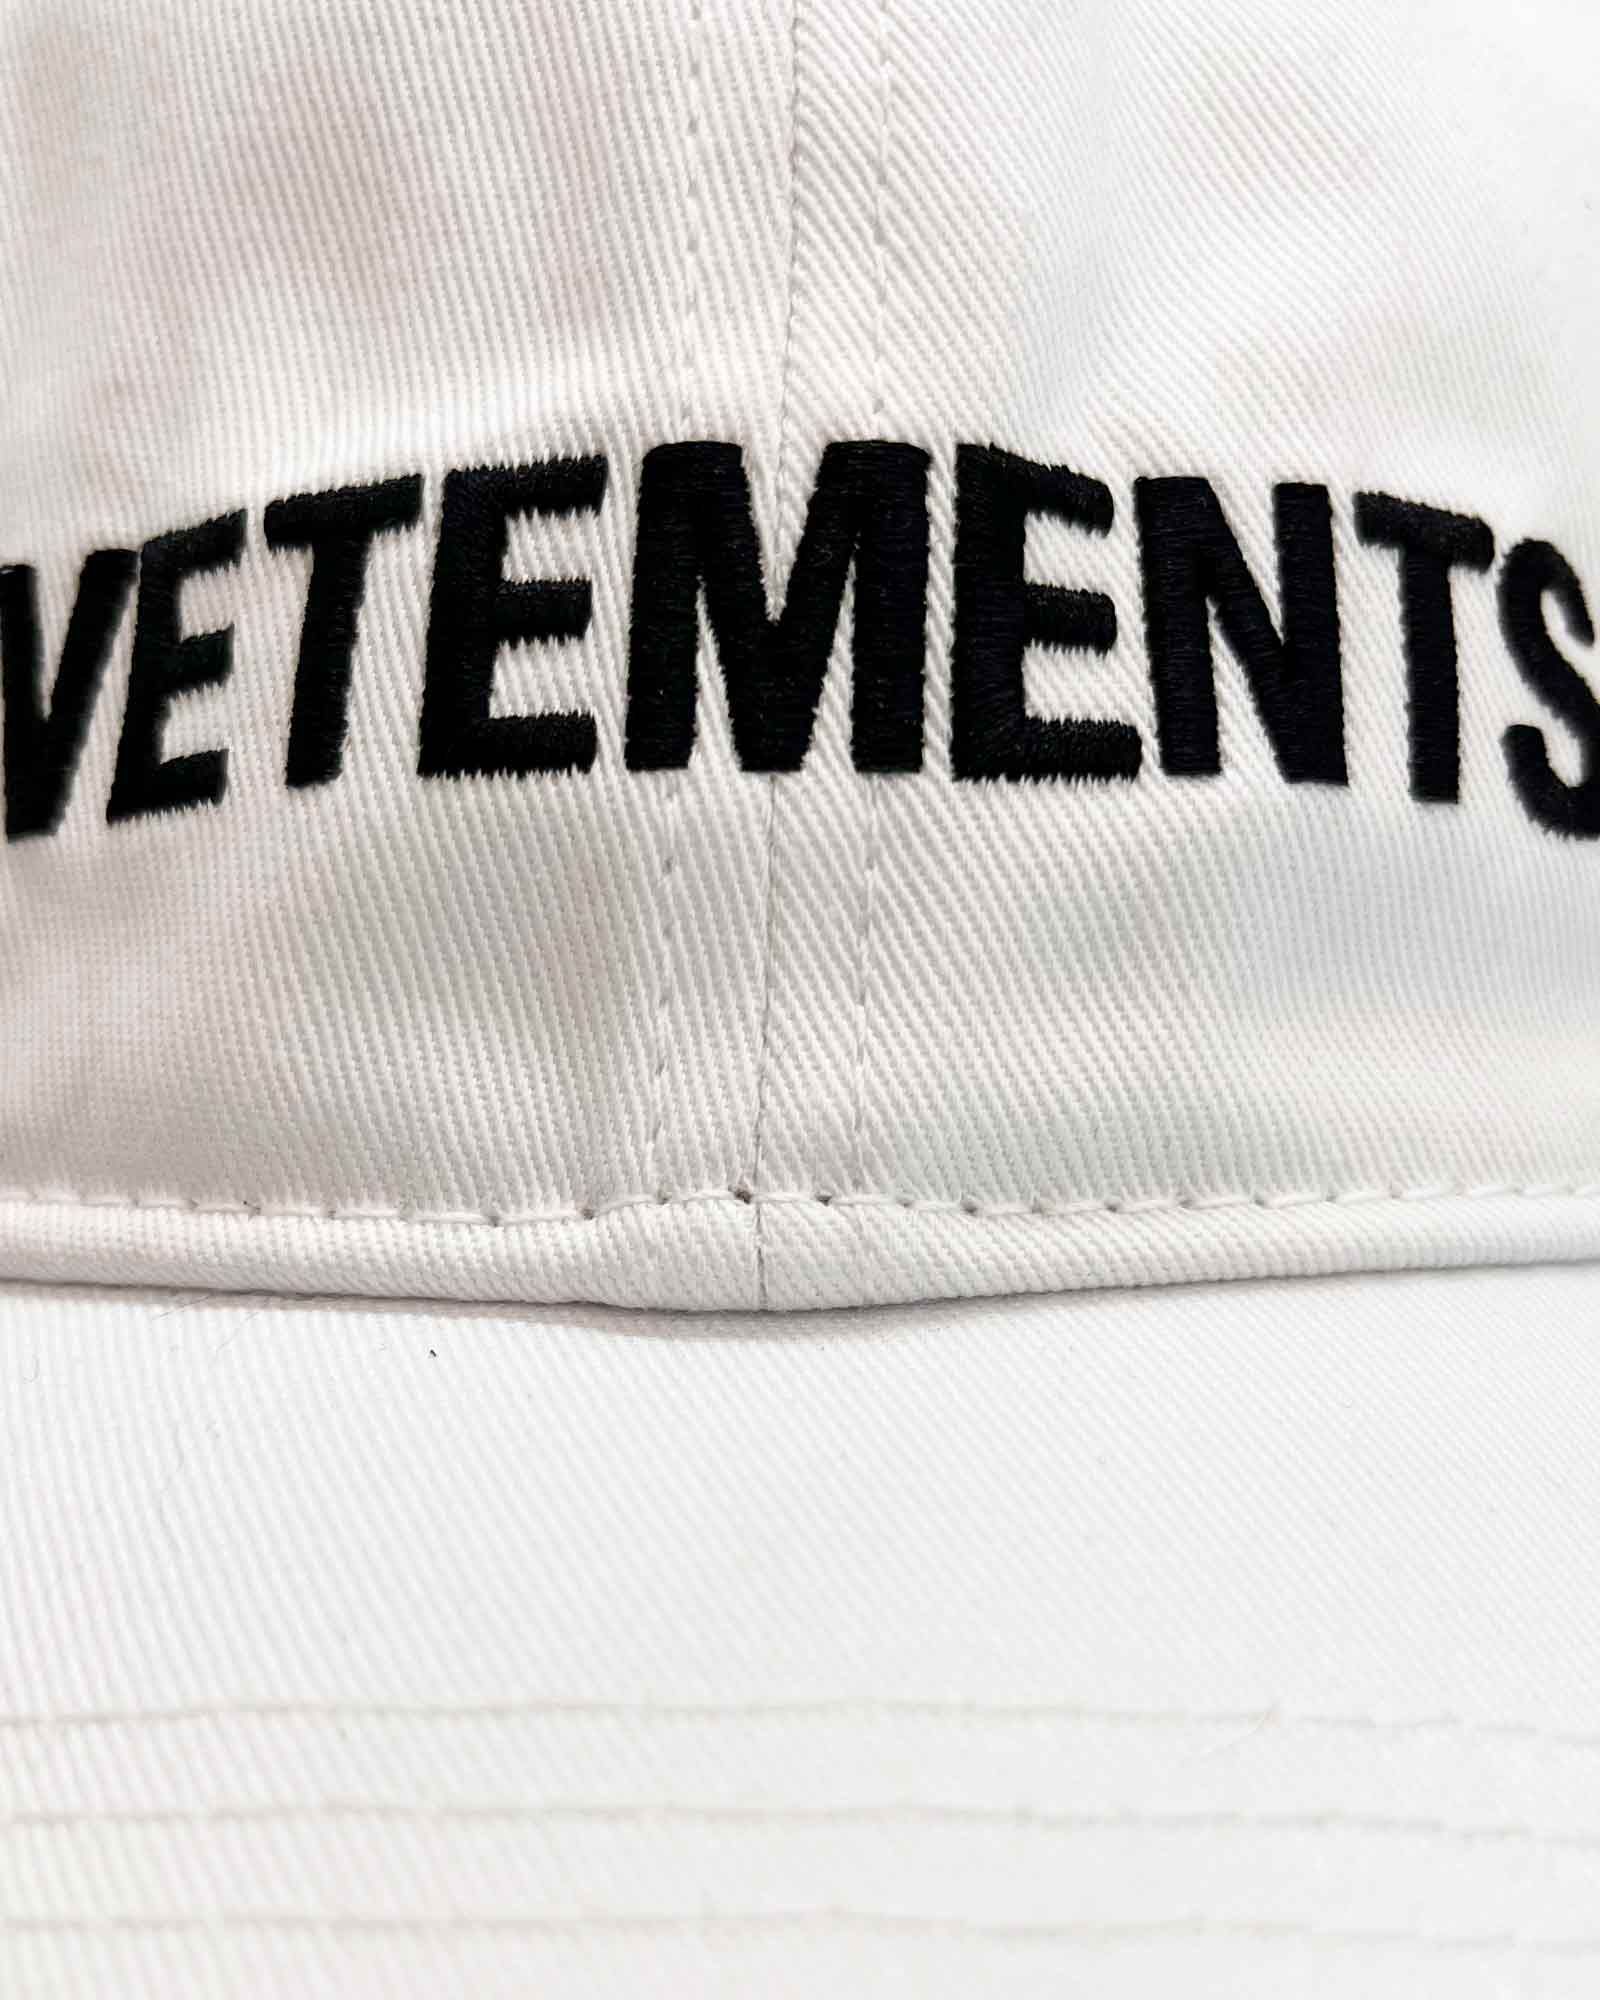 VETEMENTS - Iconic logo cap (ロゴキャップ) White | Detail